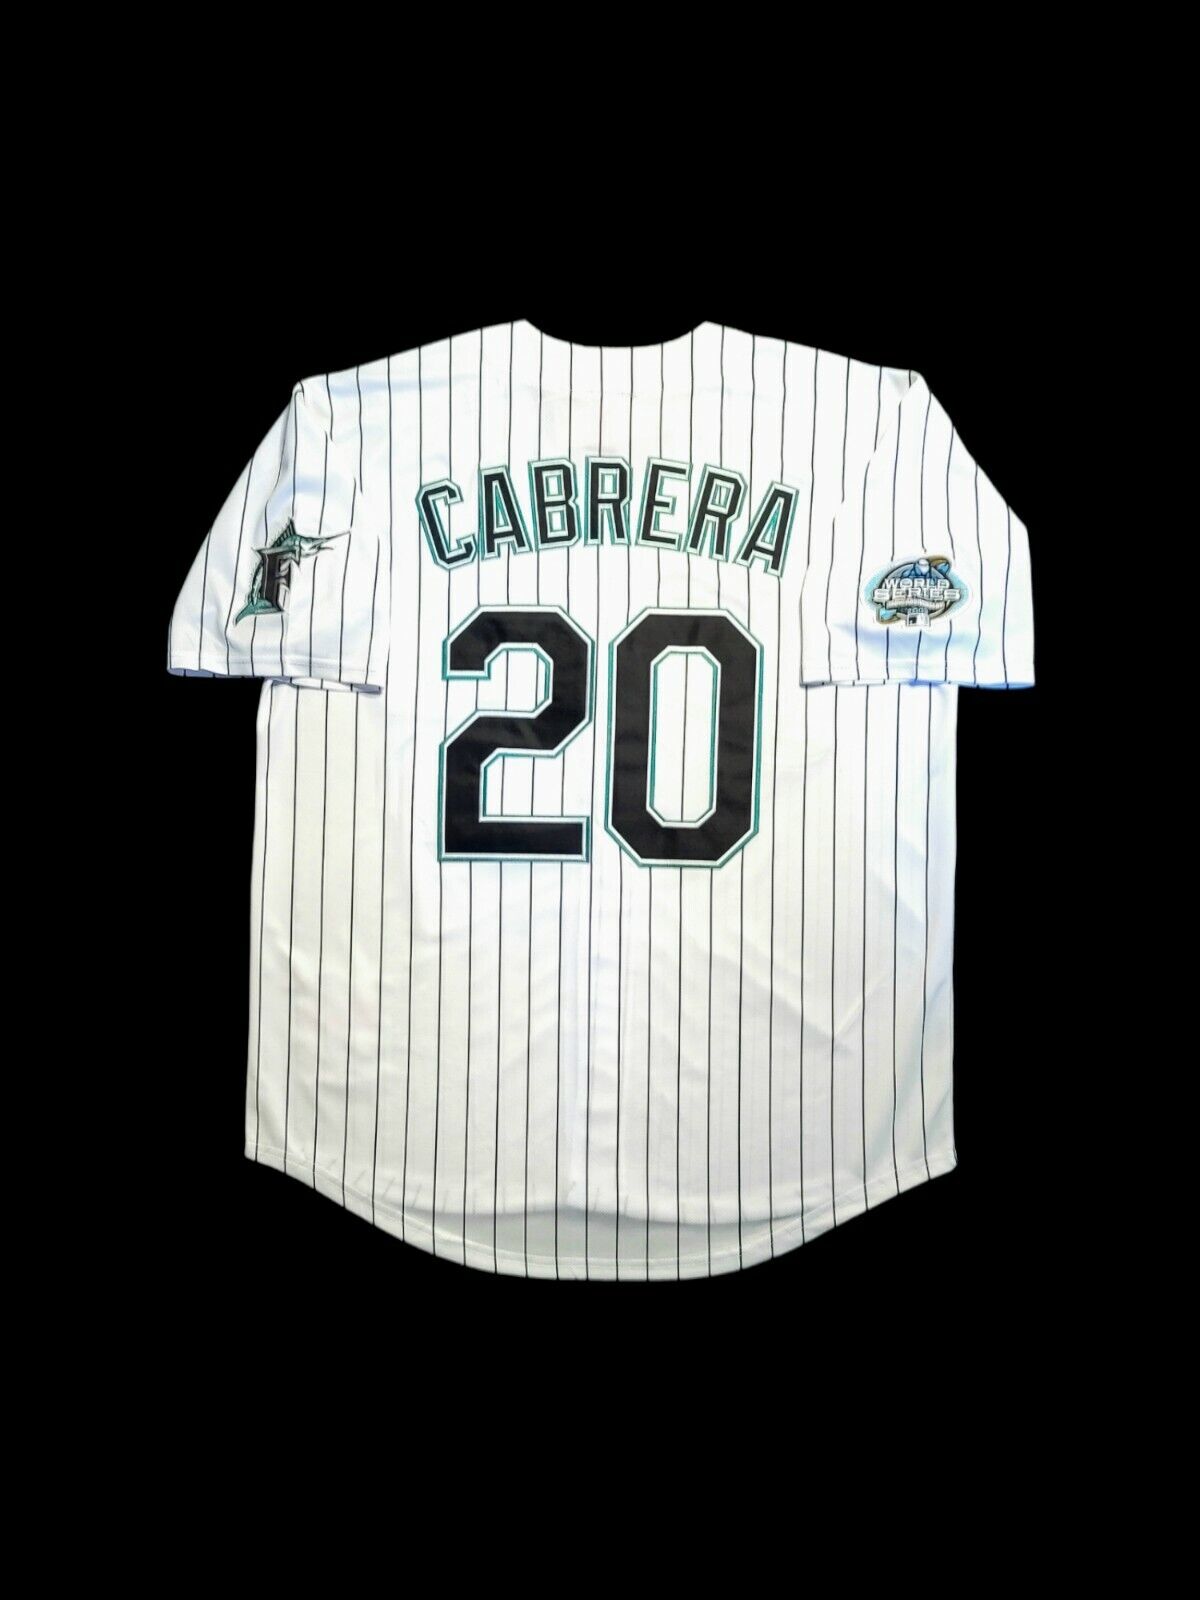 Miguel Cabrera Jersey Florida Marlins 2003 World Series Retro Throwback Stitched